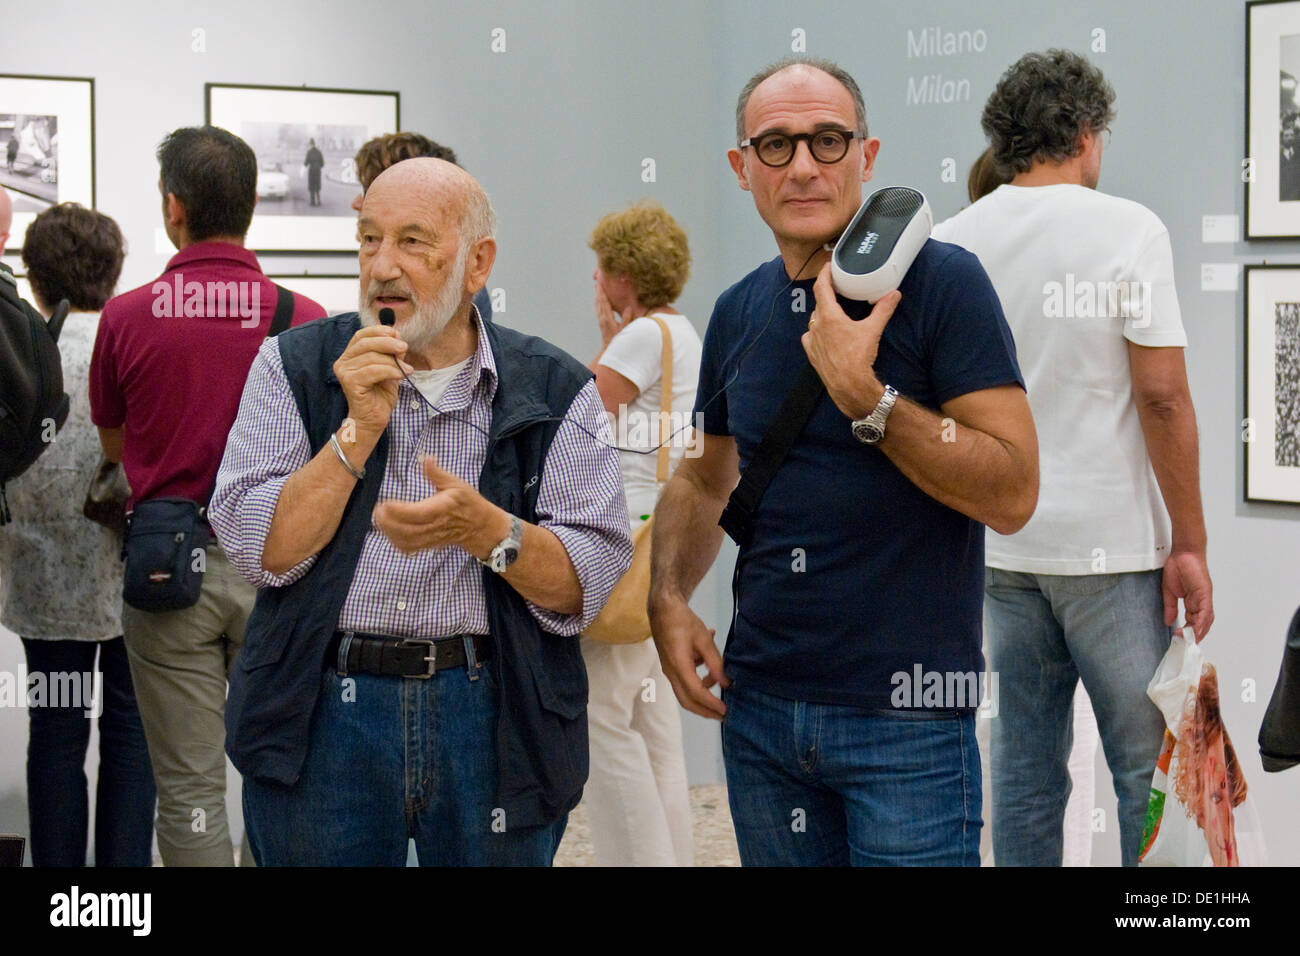 Italy, Milan, Gianni Berengo Gardin photographic exhibition, Gianni Berengo Gardin and Denis Curti Stock Photo